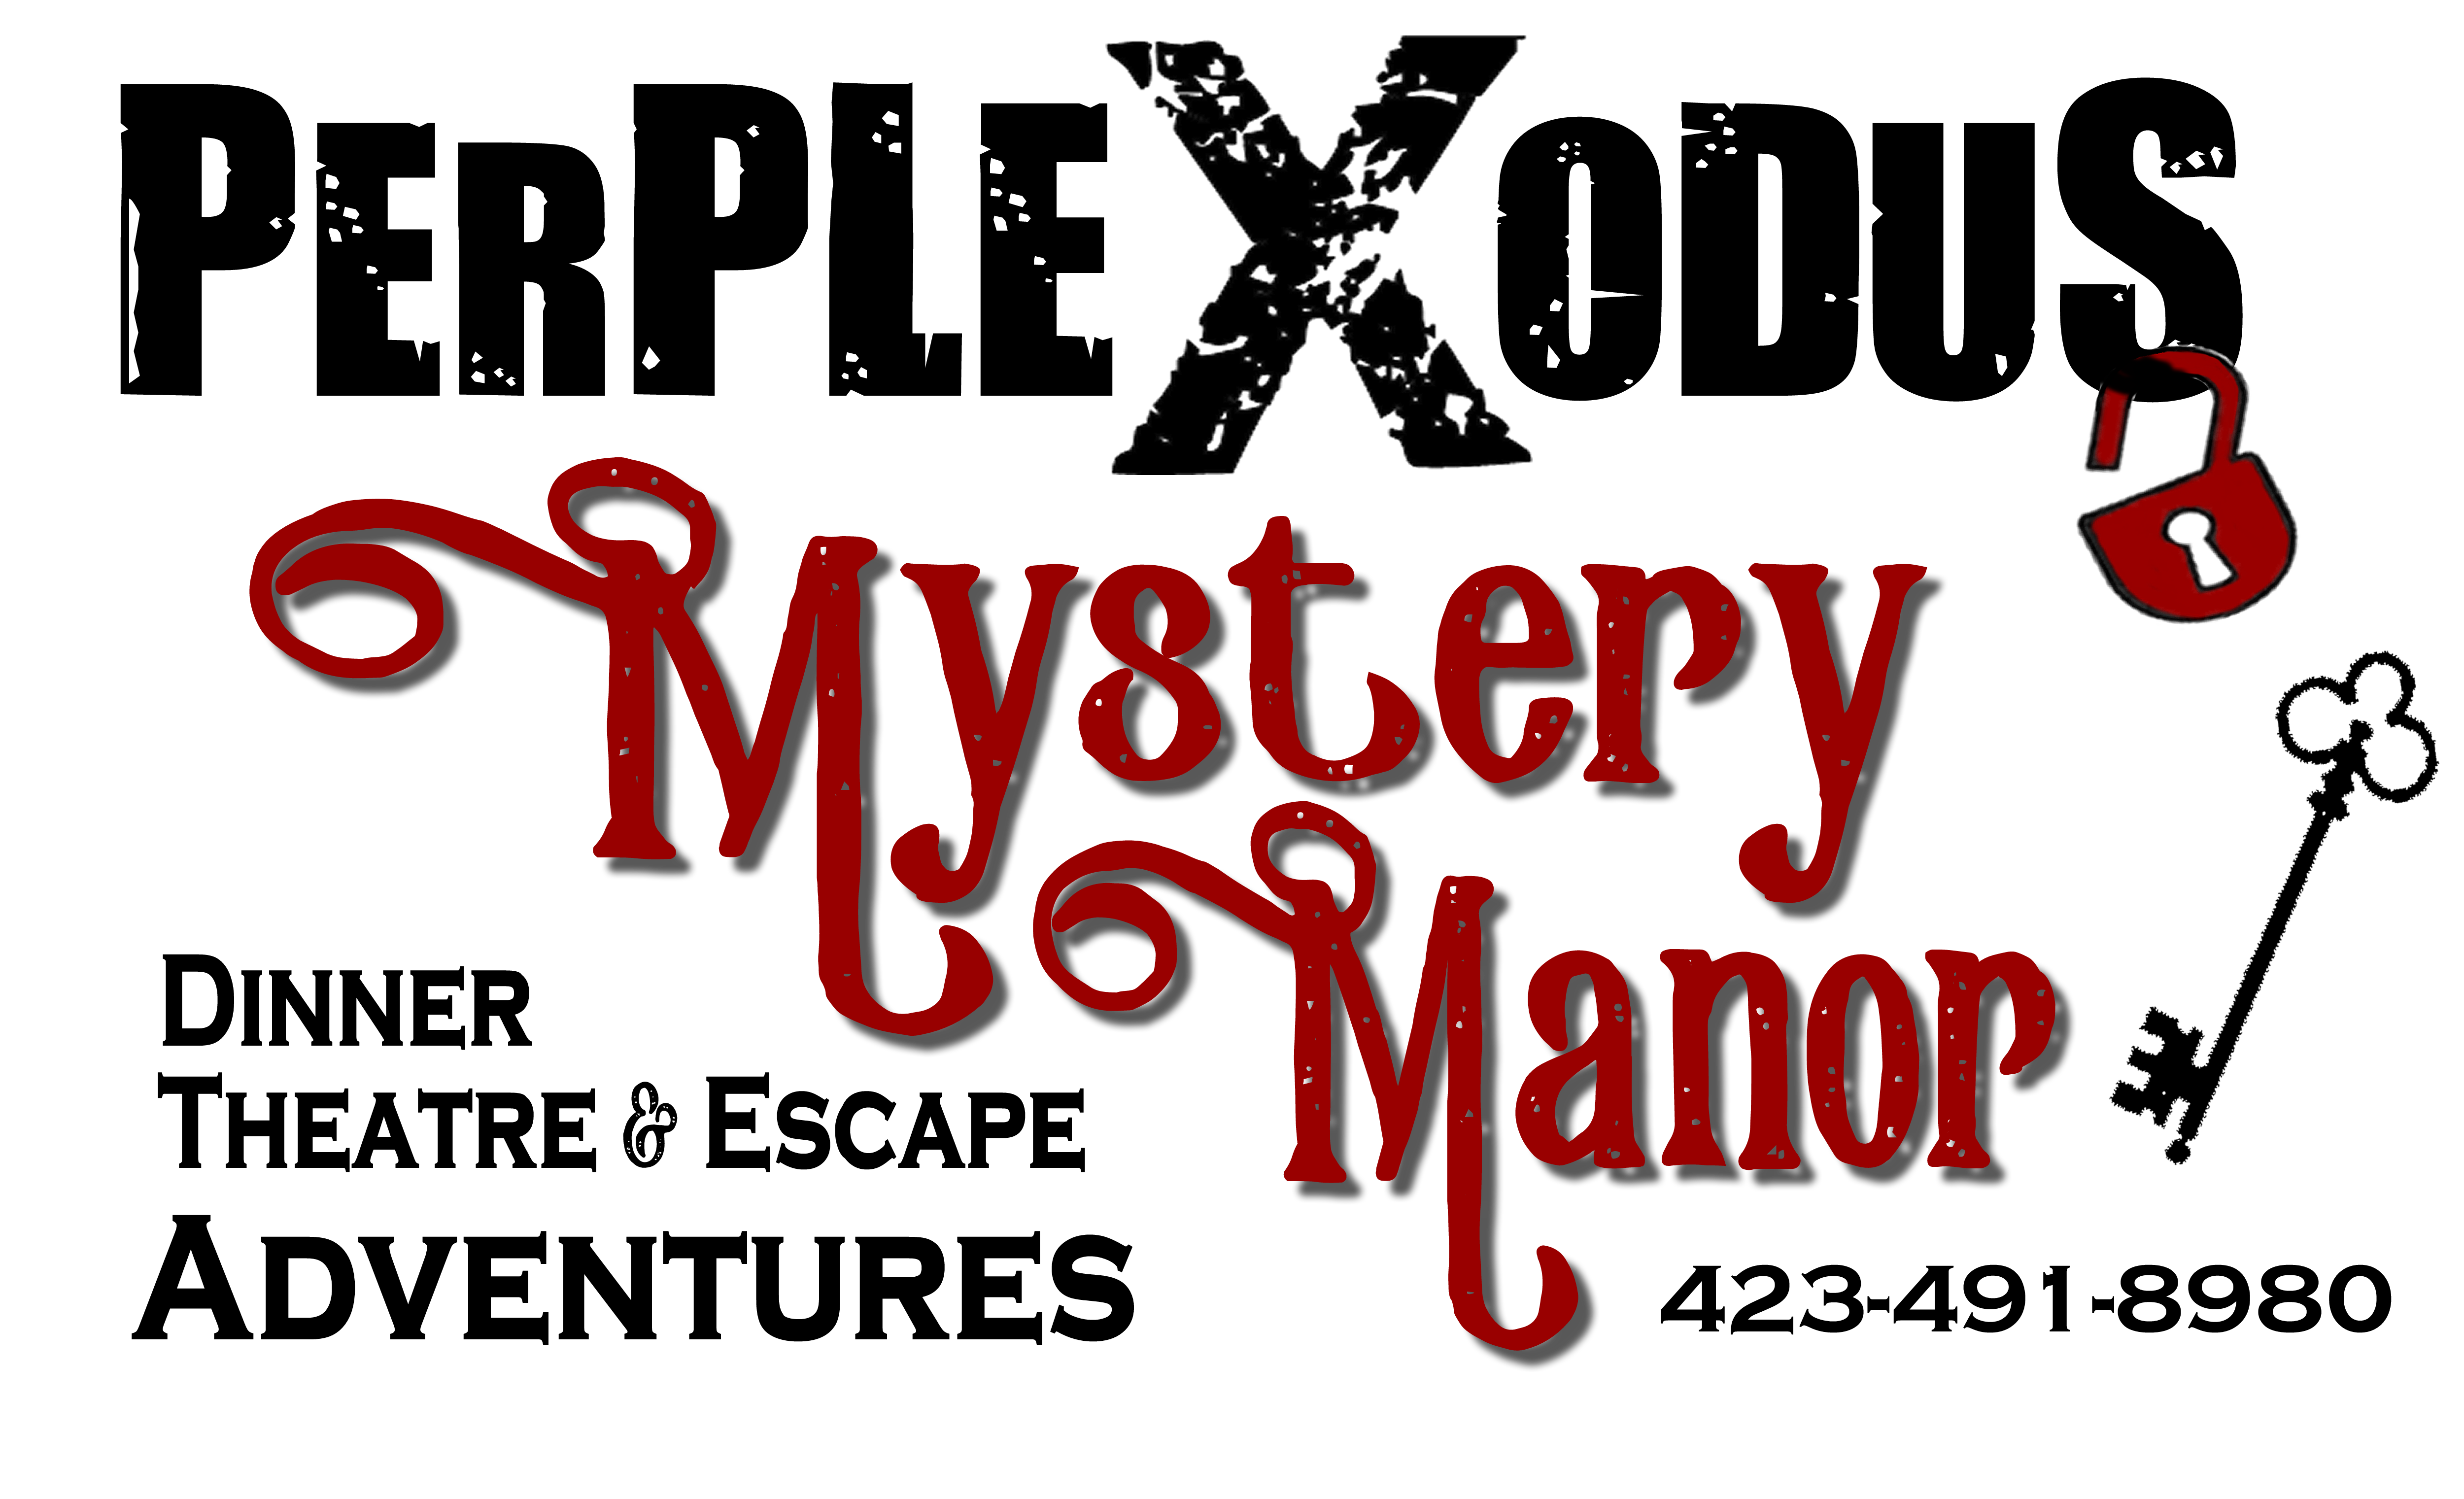 Perplexodus Mystery Manor